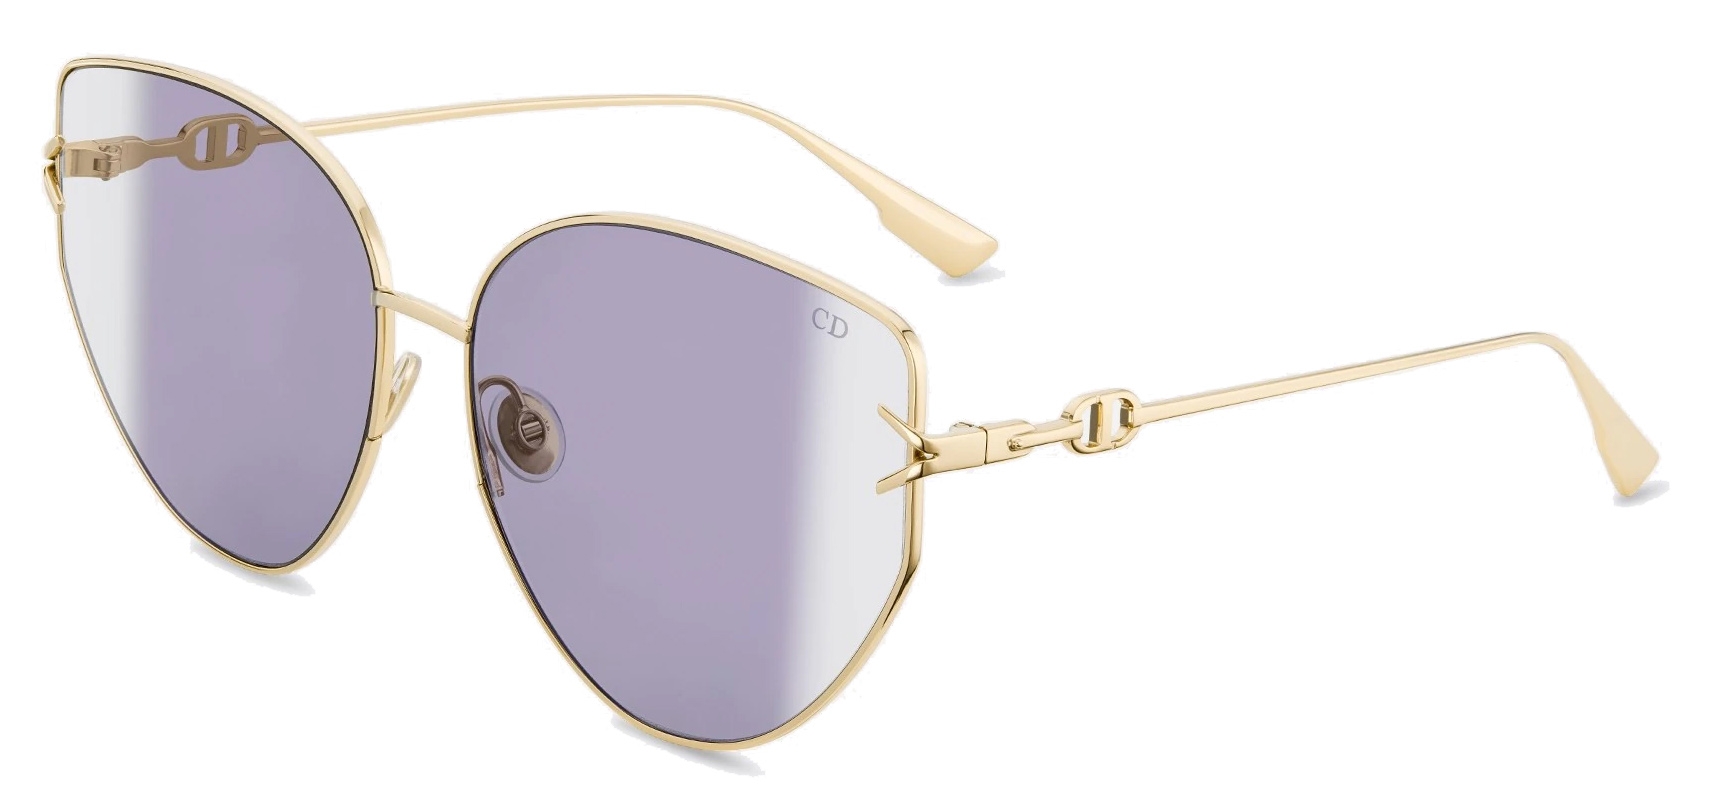 dior sunglasses purple